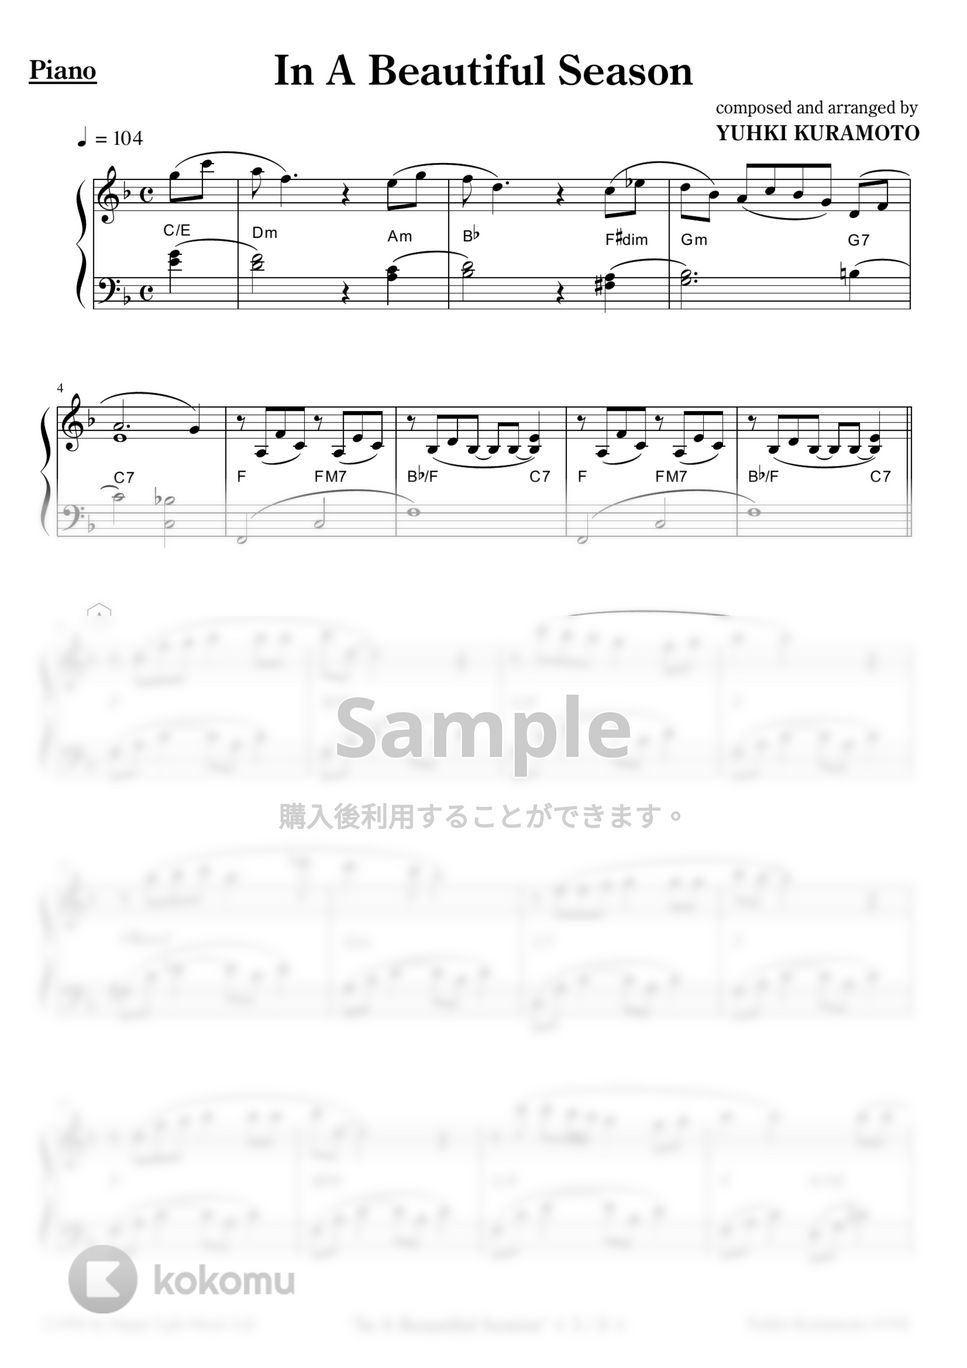 Yuhki Kuramoto - In A Beautiful Season (Easy Ver.) by Yuhki Kuramoto